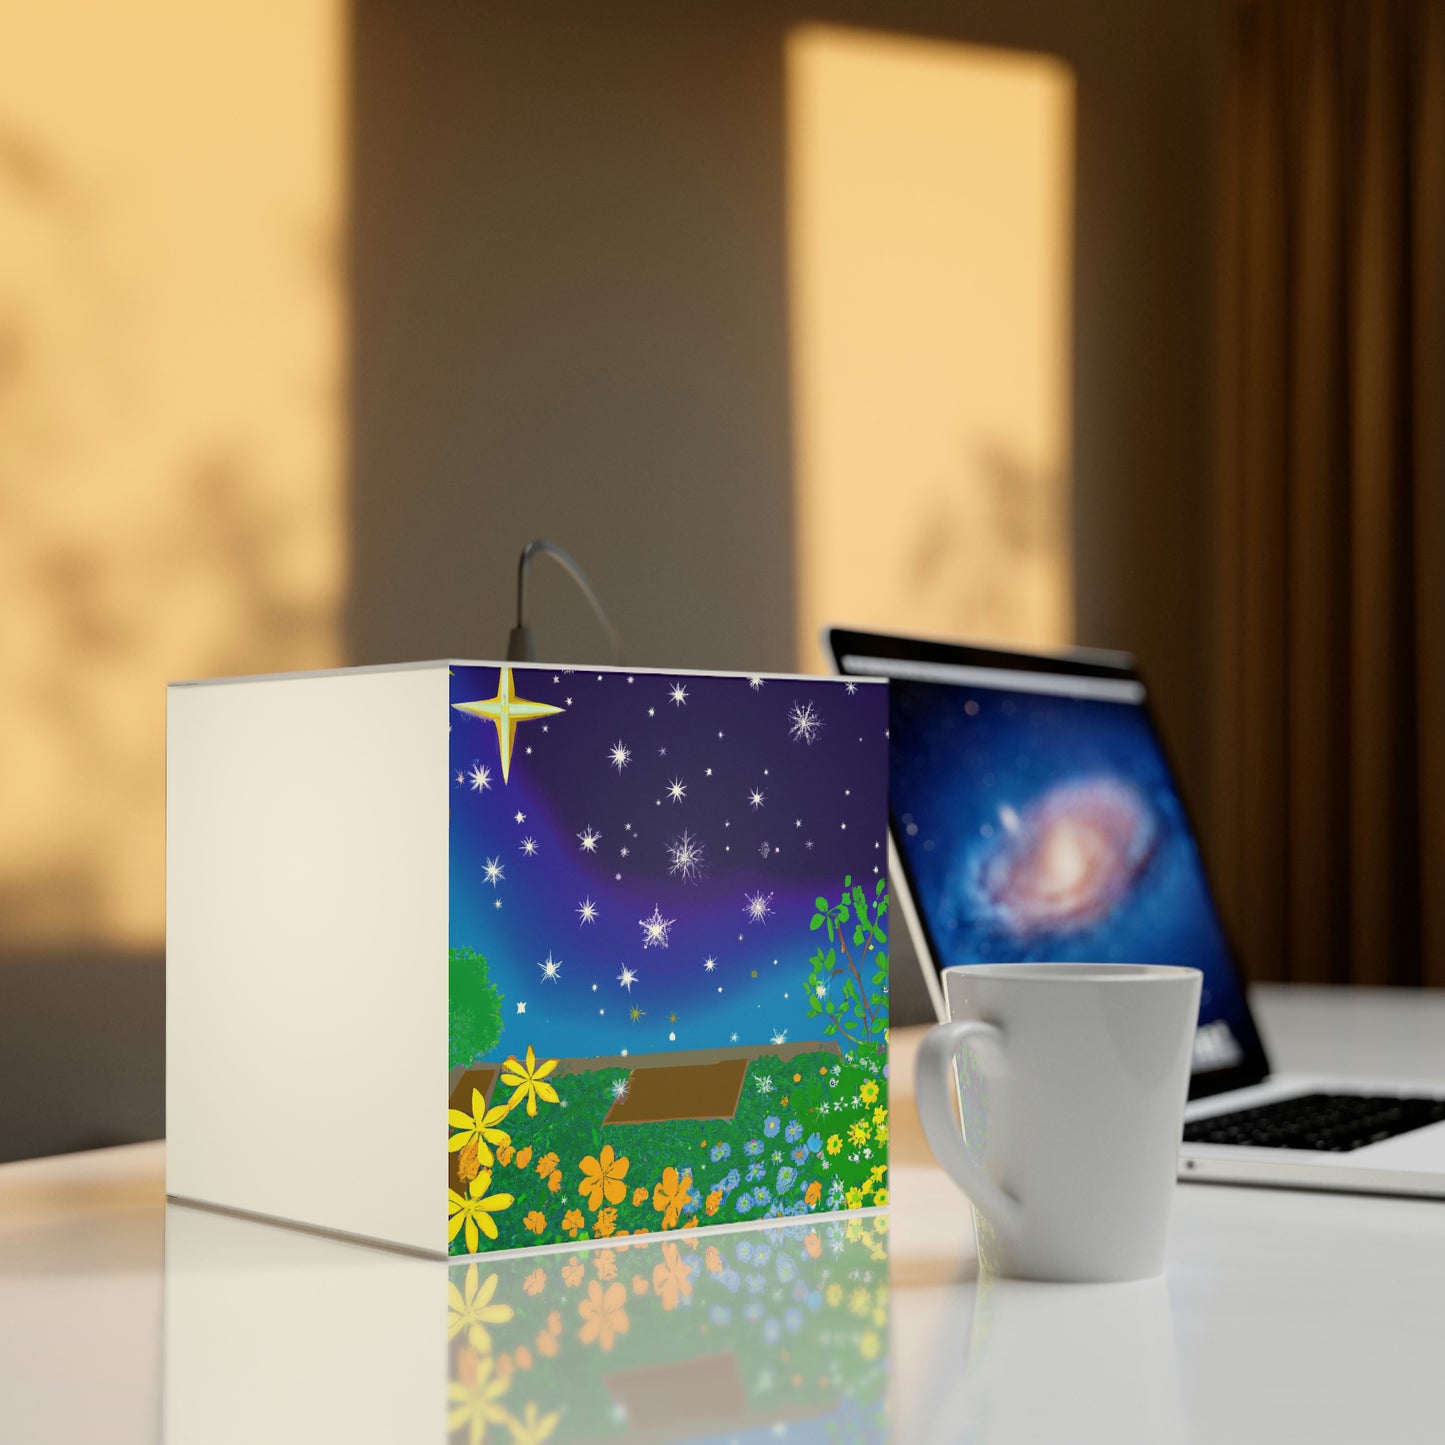 "A Celestial Garden of Color" - Die Alien Light Cube Lampe